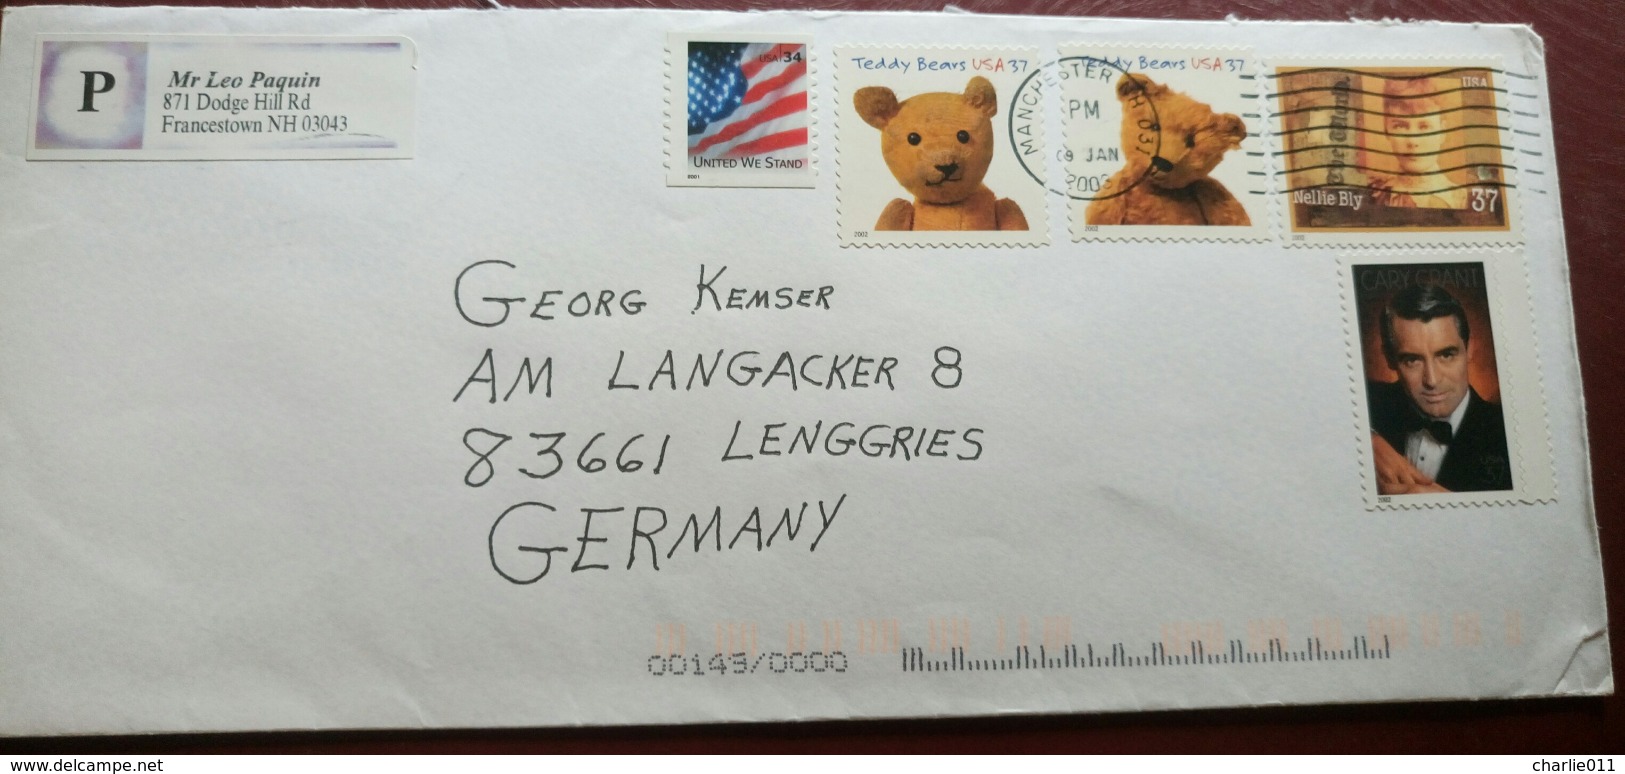 TEDDY BEARS-37 C-NELLIE BLY-CARY GRANT-MANCHESTER-USA-GERMANY-2003 - Briefe U. Dokumente